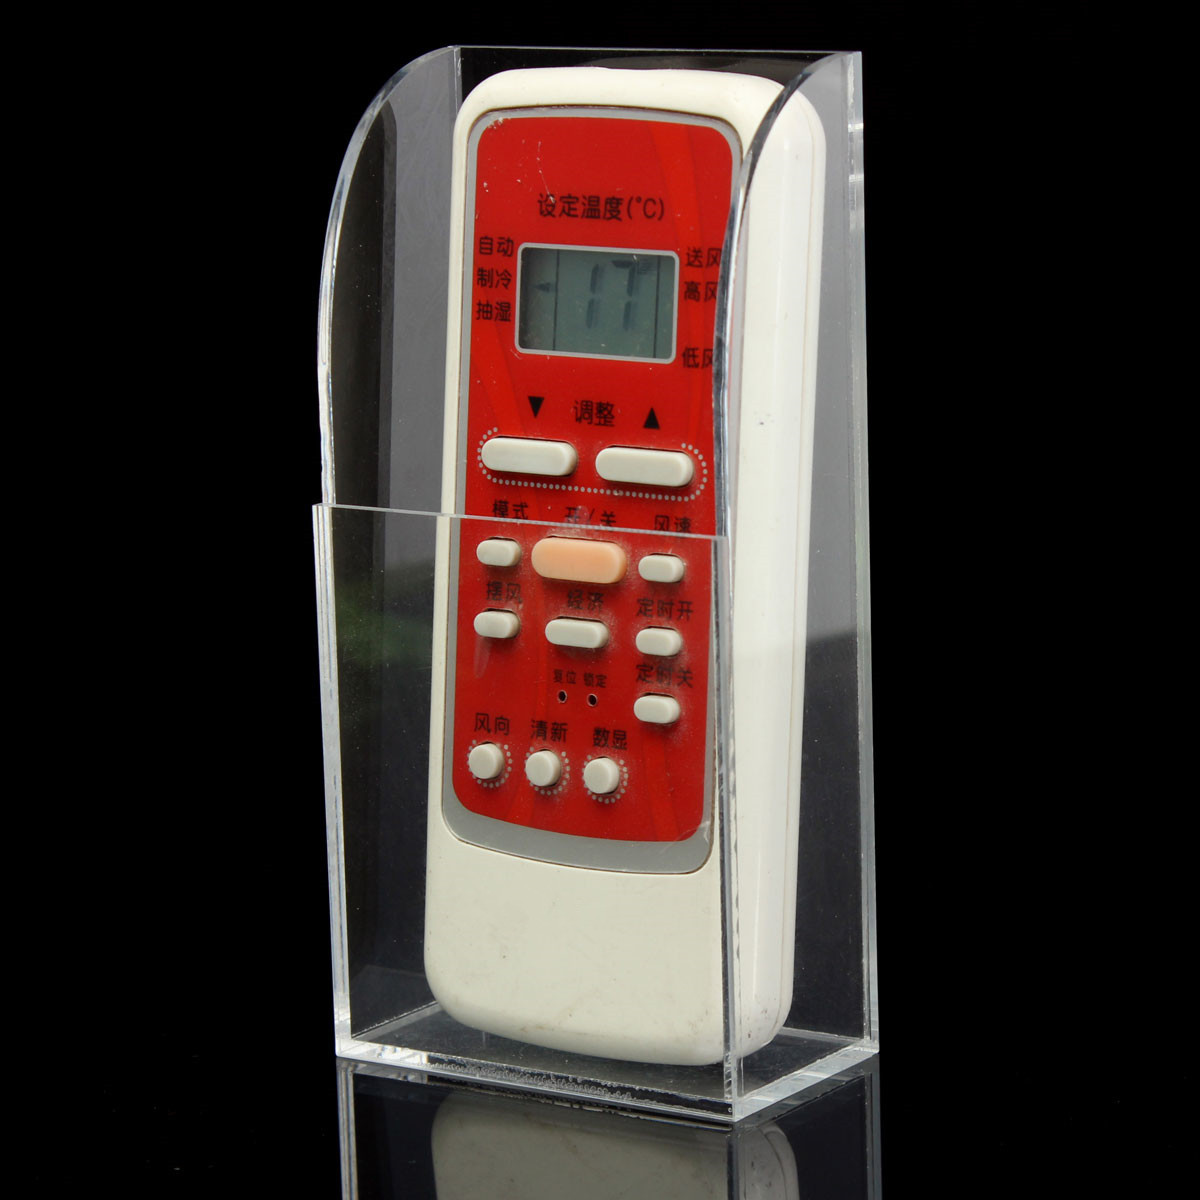 Acrylic-TV-Air-Conditioner-Remote-Control-Holder-Case-Wall-Mount-Storage-Box-1025937